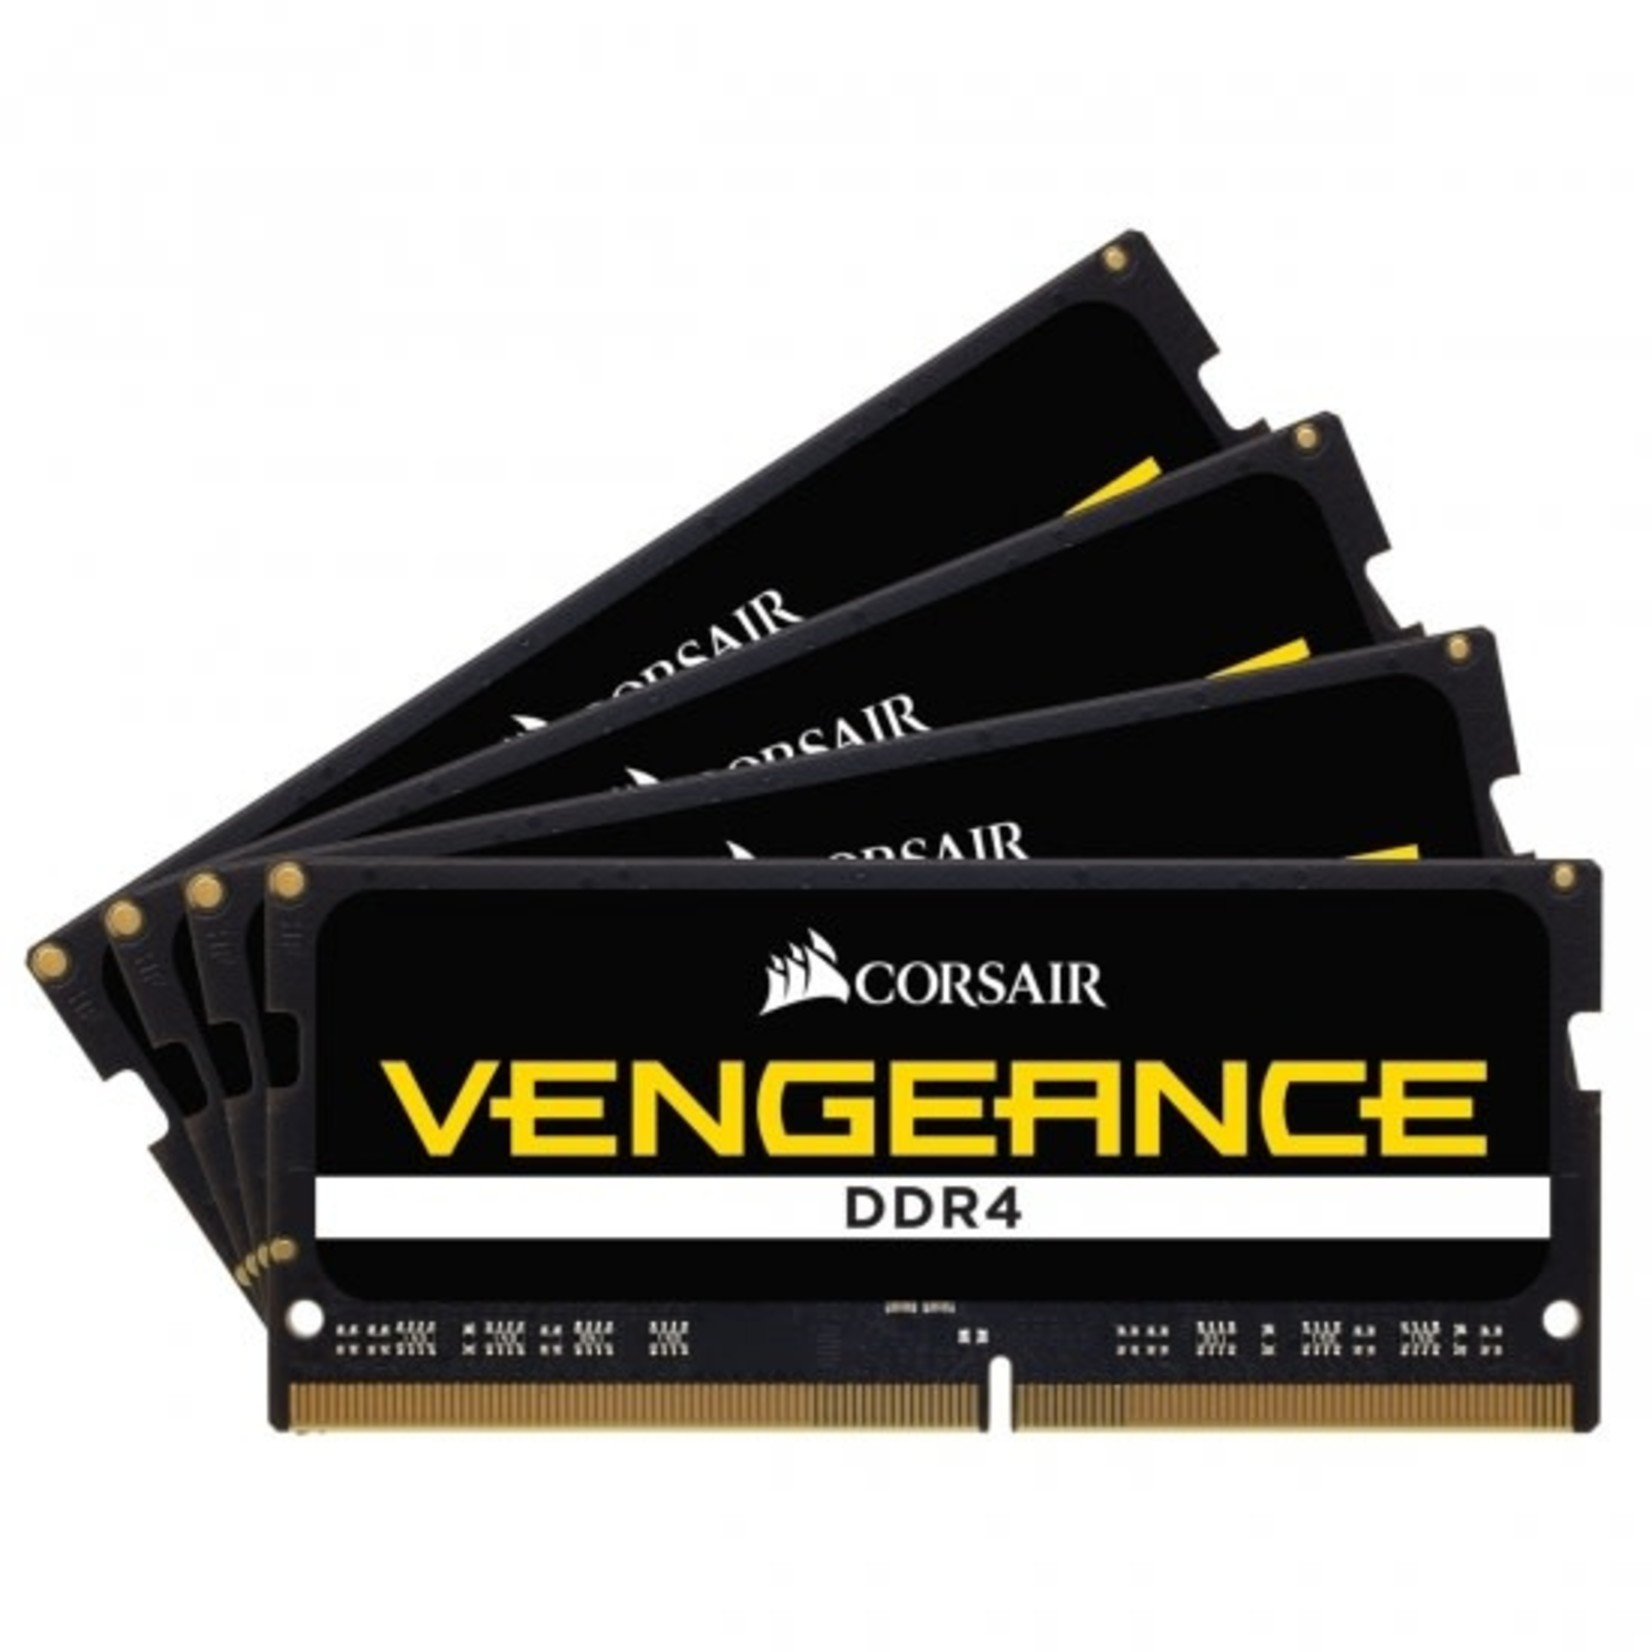 Vengeance® Series 16GB (1 x 16GB) DDR4 SODIMM 3200MHz CL22 Memory Kit